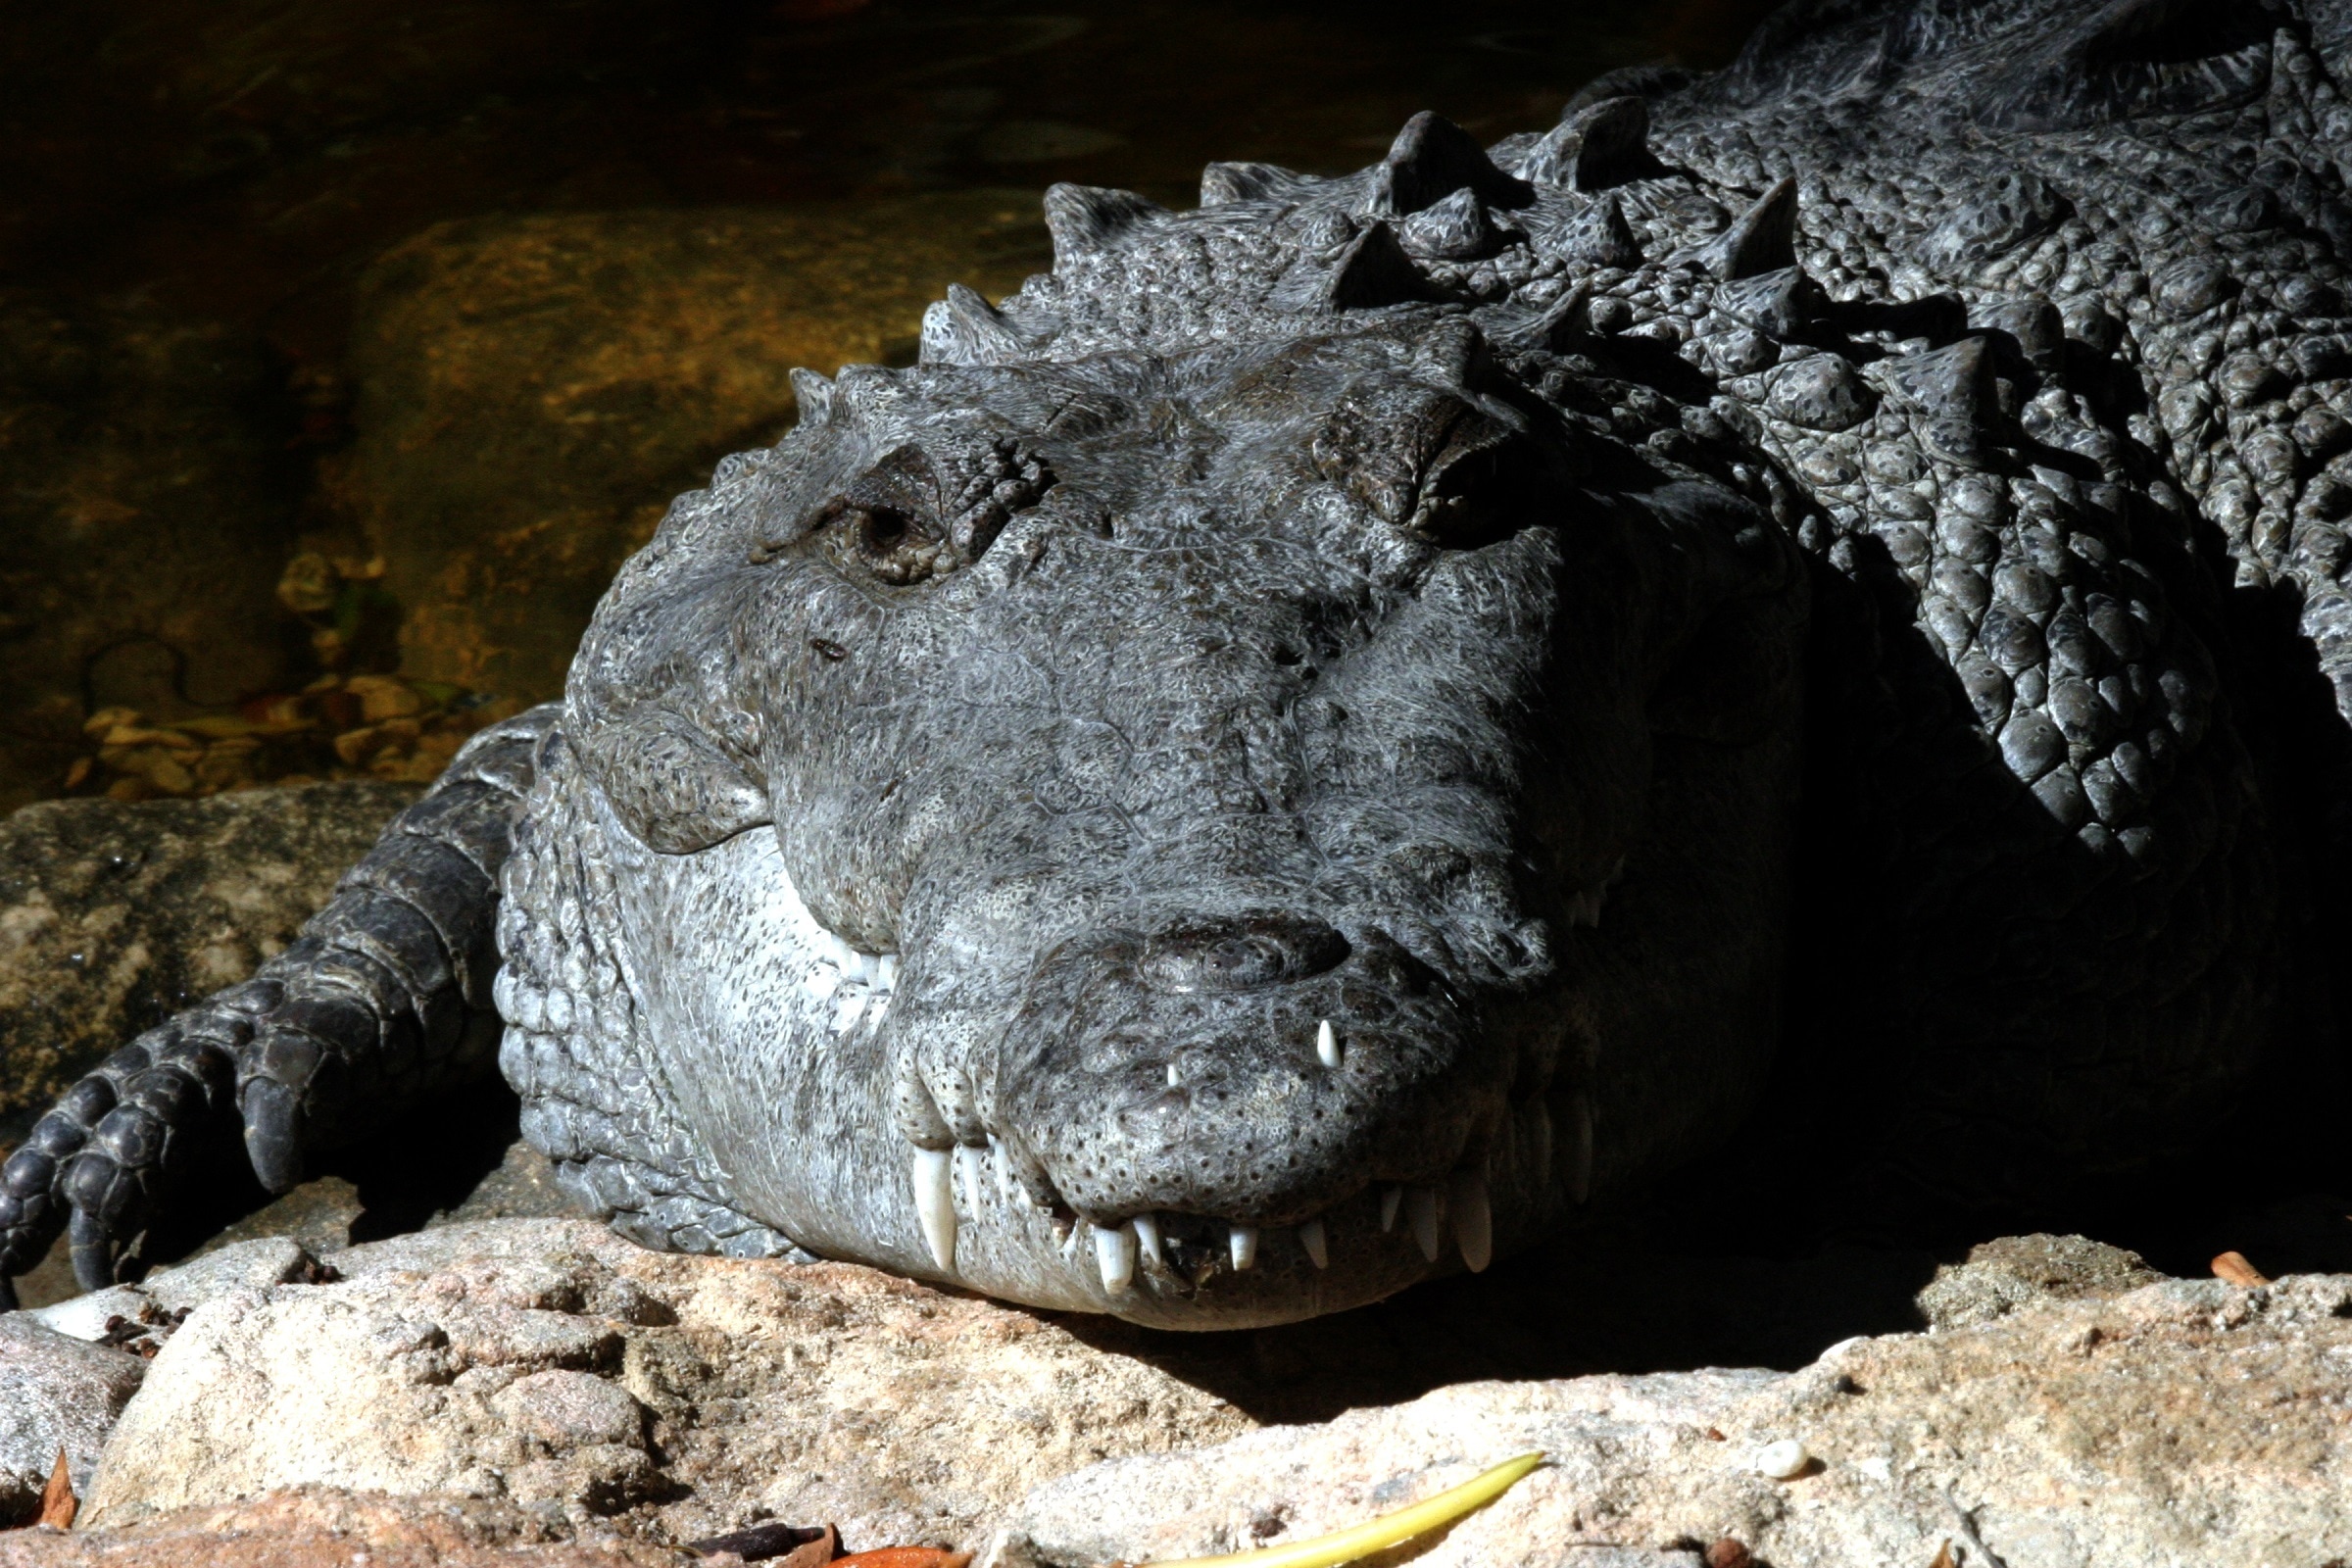 gray crocodile